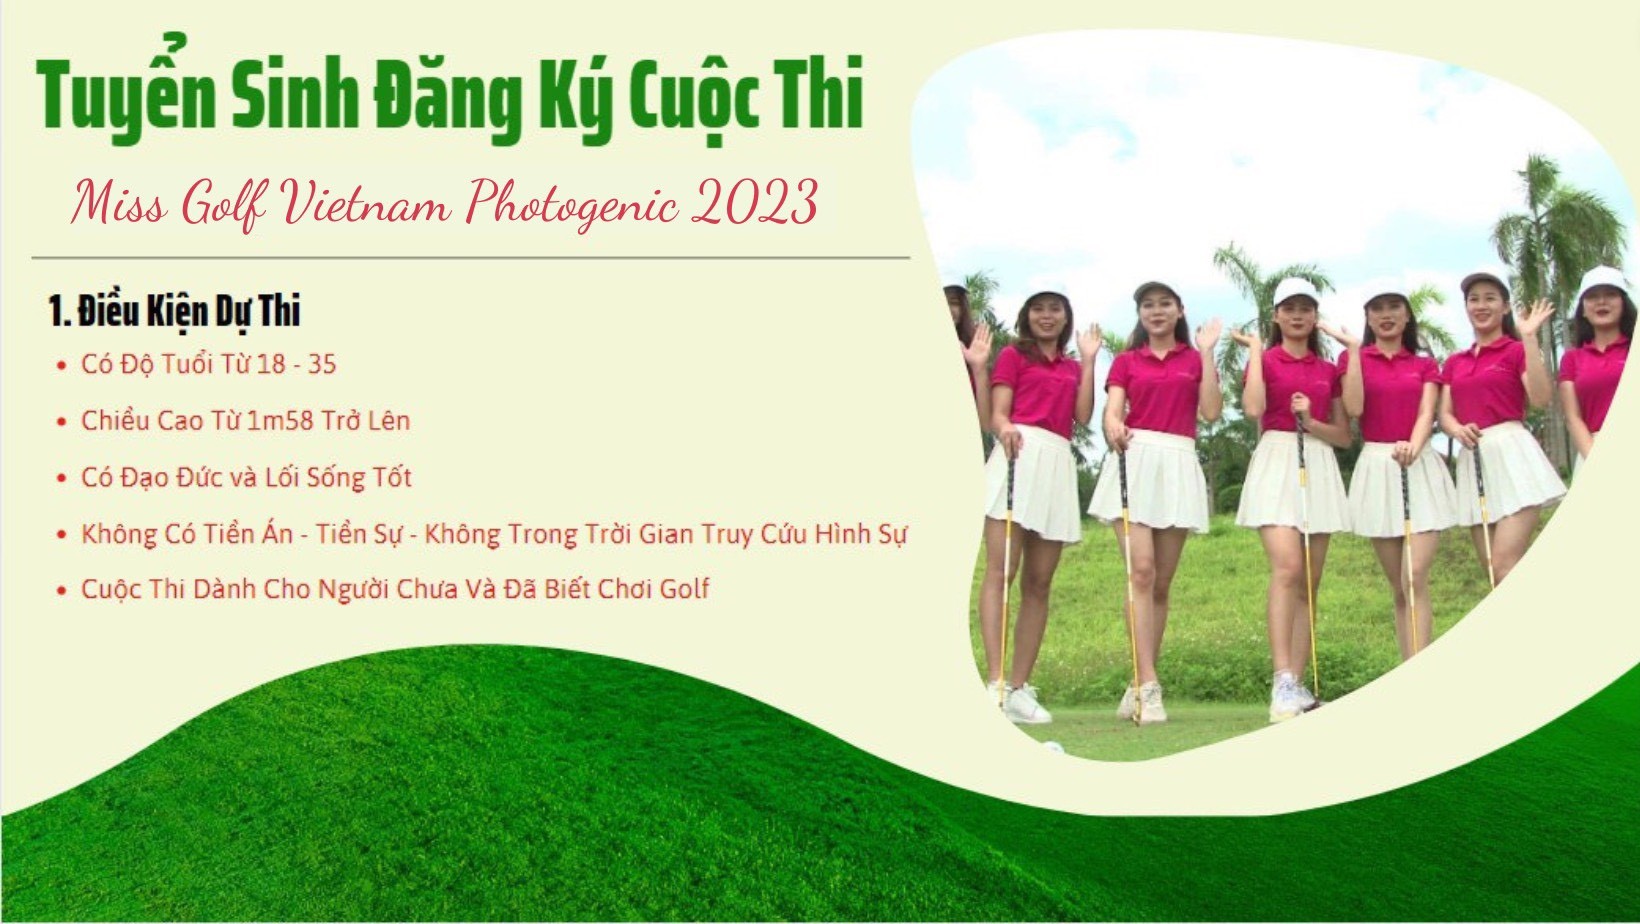 miss-golf-vietnam-photogenic-ton-vinh-ve-dep-phu-nu-tren-san-golf-baodulich-the-thao-dulichgiaitri-4-1670824132.jpg